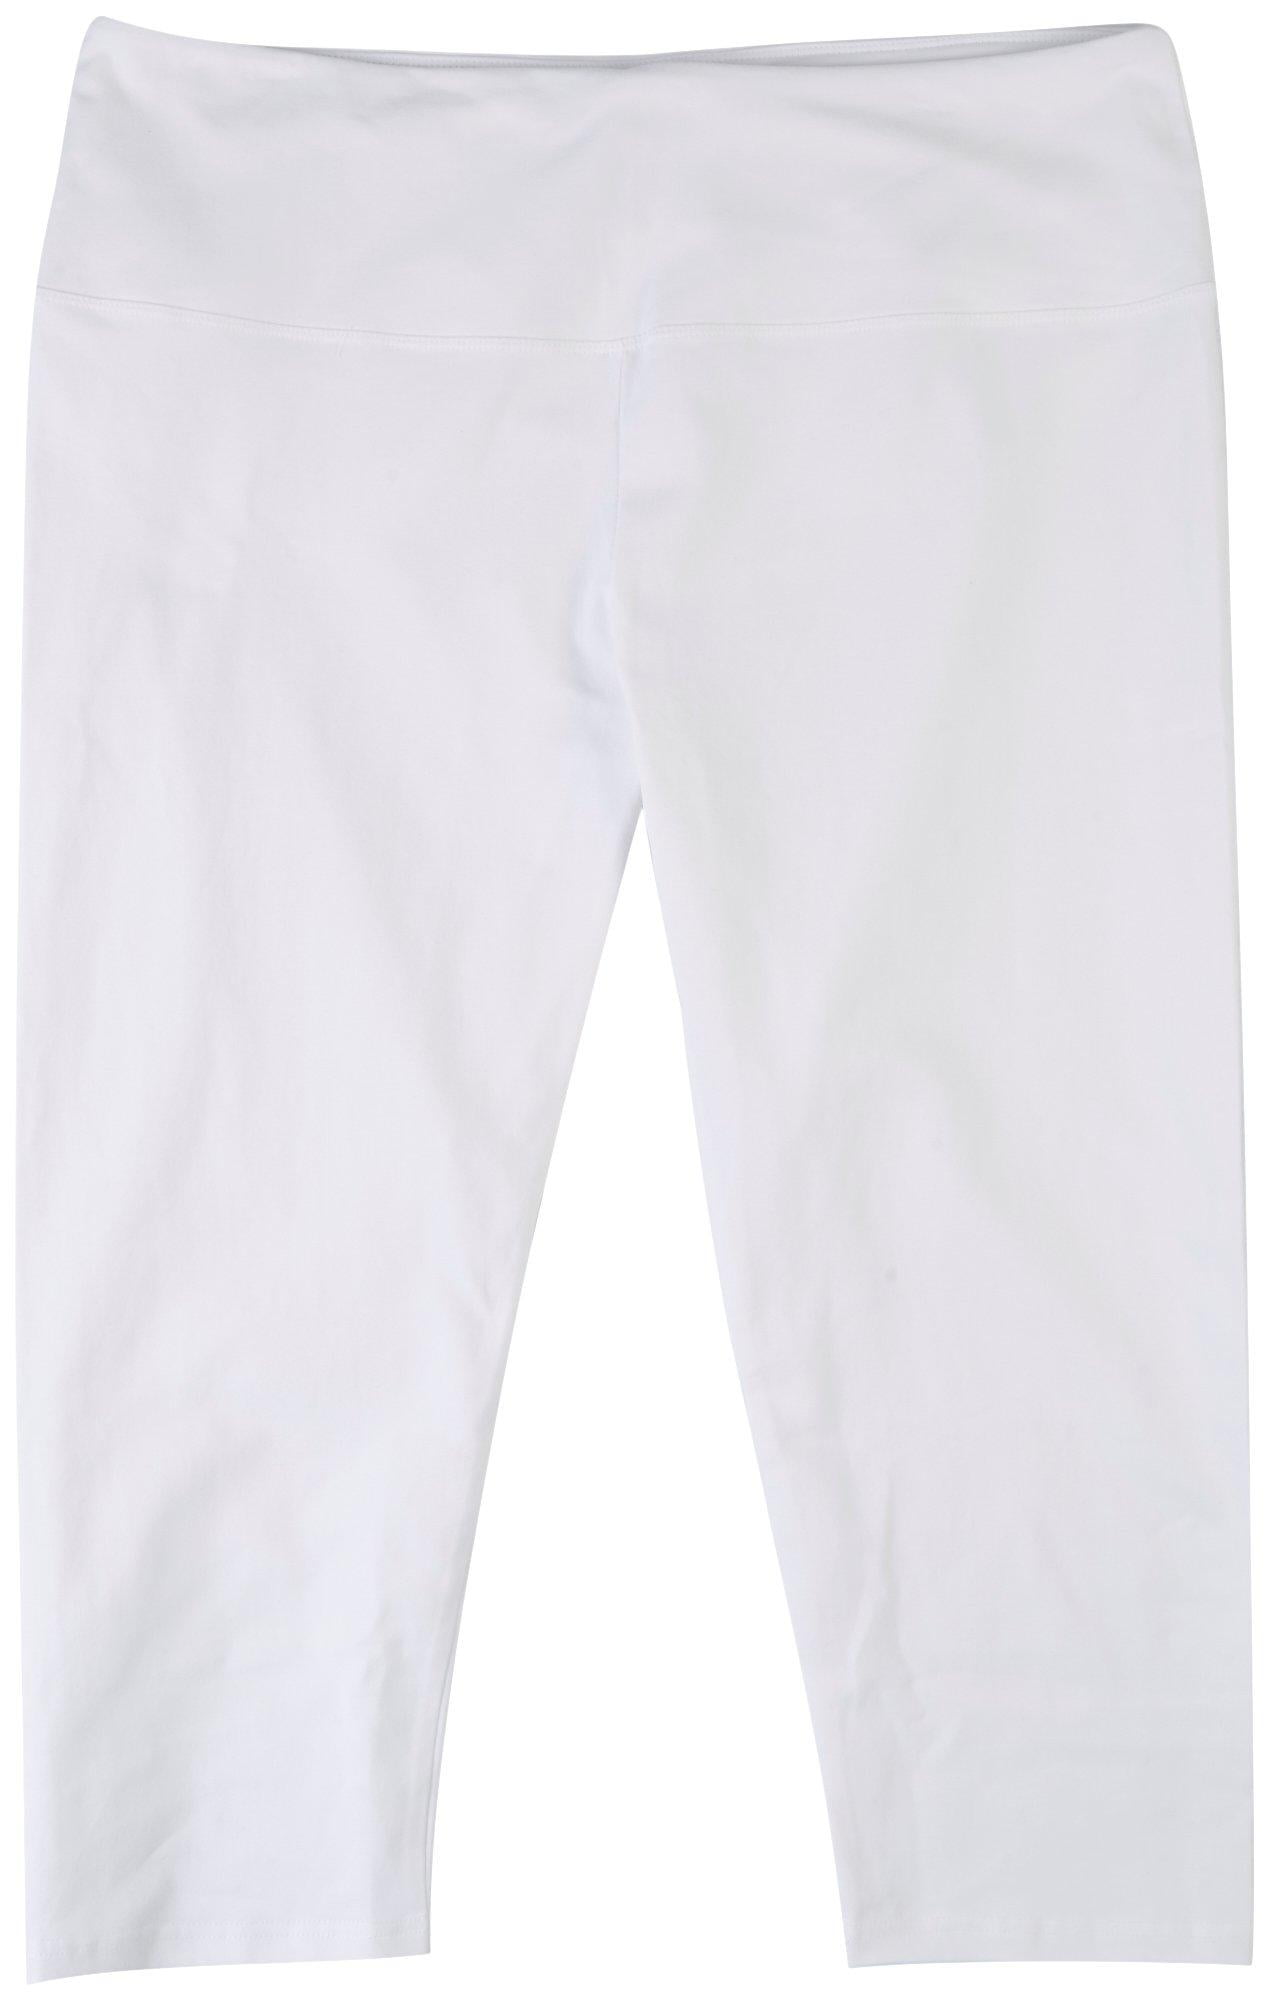 Khakis & Co Womens Suave Solid Flat Front Capri Leggings 2X White ...